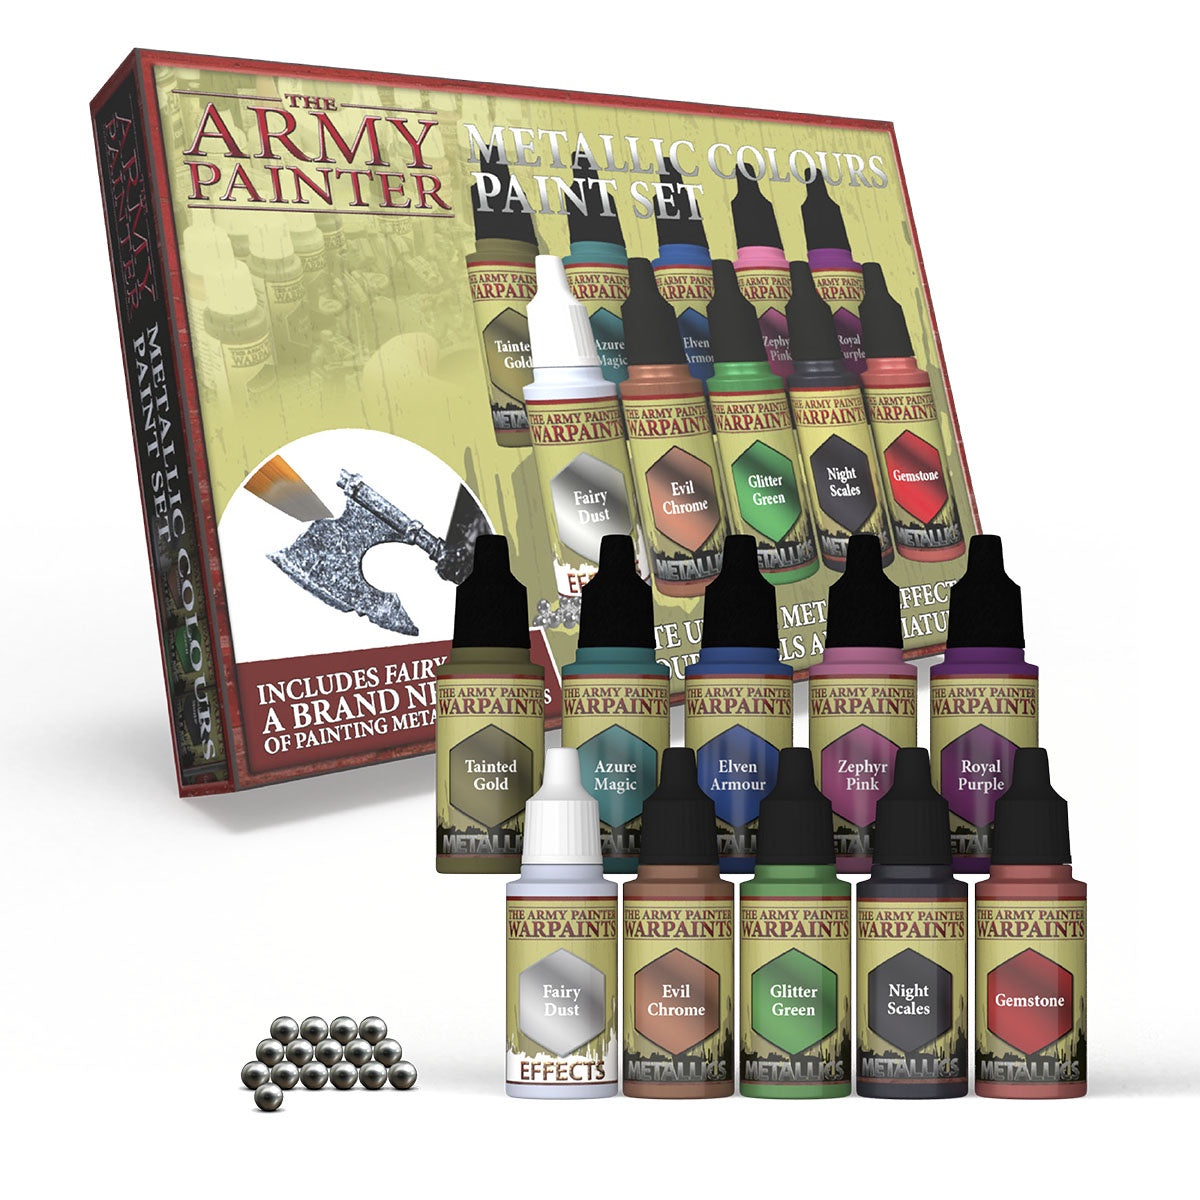 Army Painter Metallic Colours Paint Set w/ Mixing Balls